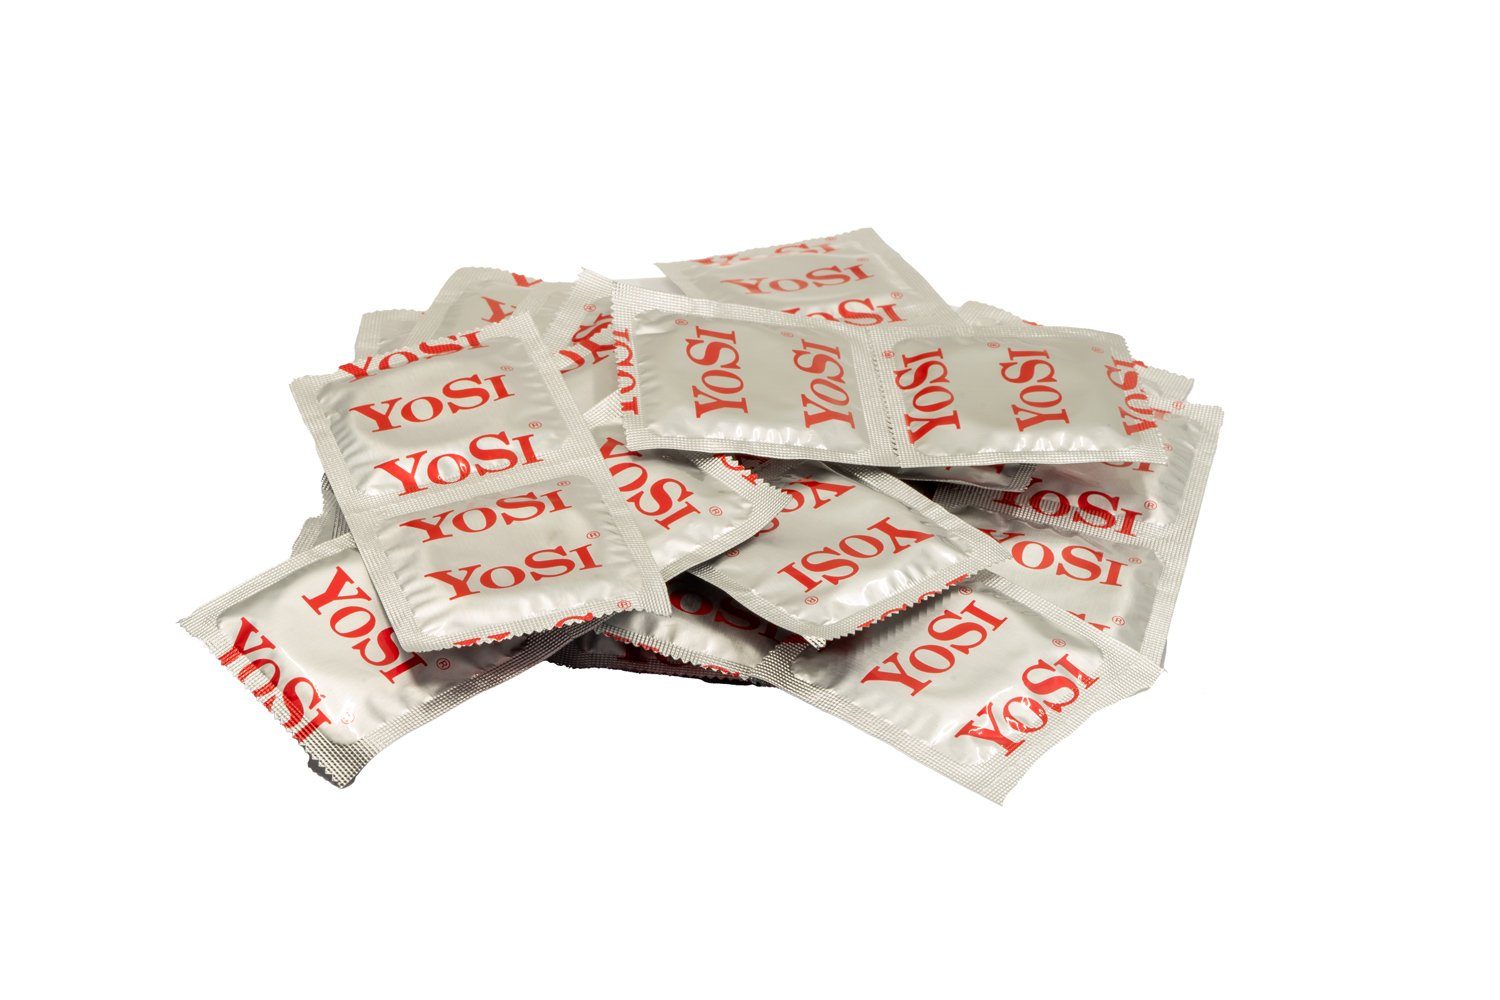 YOSI Set 100 (2x50er) Standardgröße in Starke 100 25876R, - Stück X-TRA, Kondome Markenkondome extra